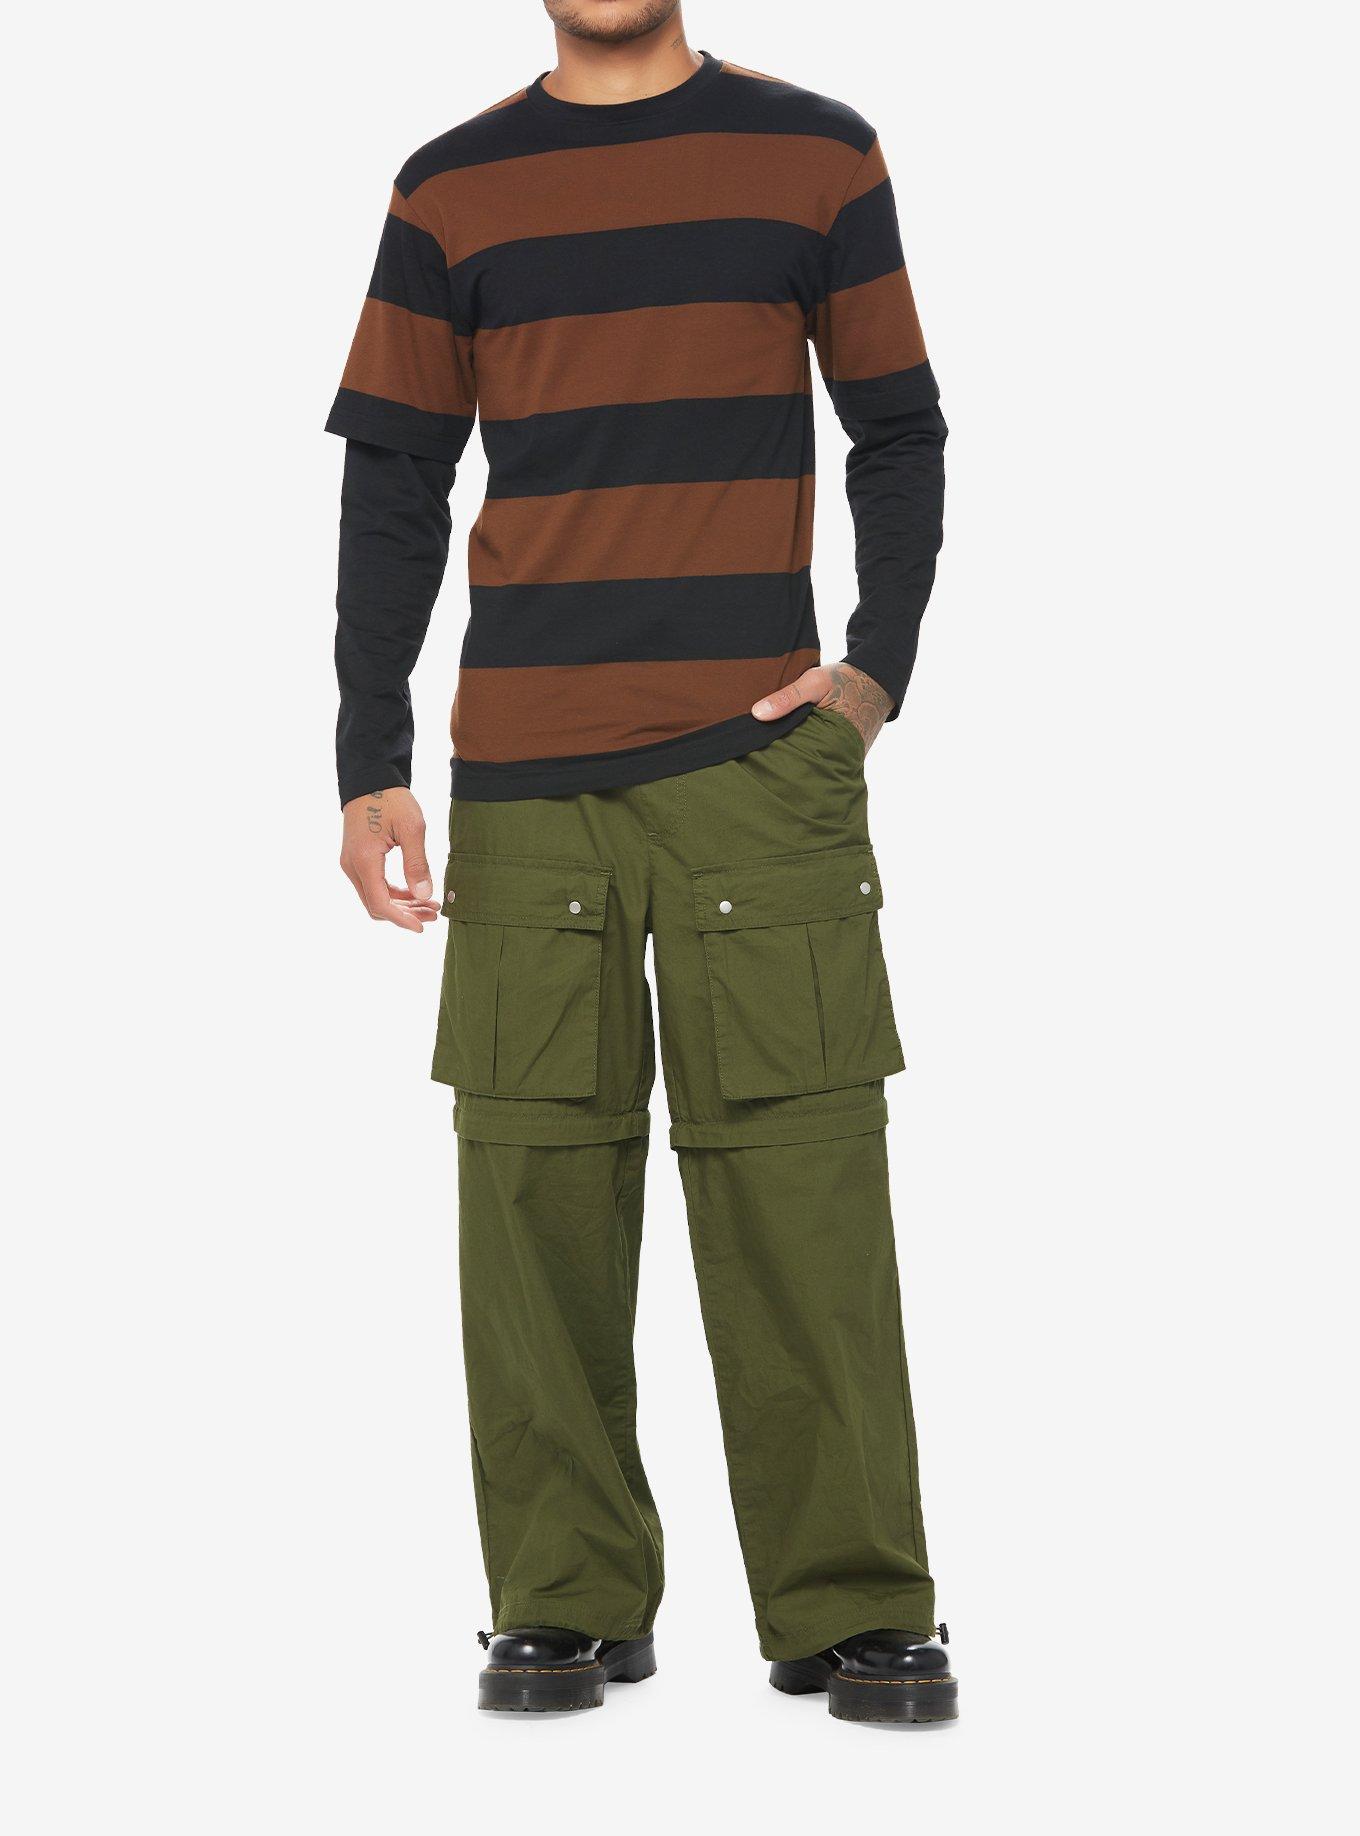 Black & Brown Stripe Twofer Long-Sleeve T-Shirt, BROWN, alternate